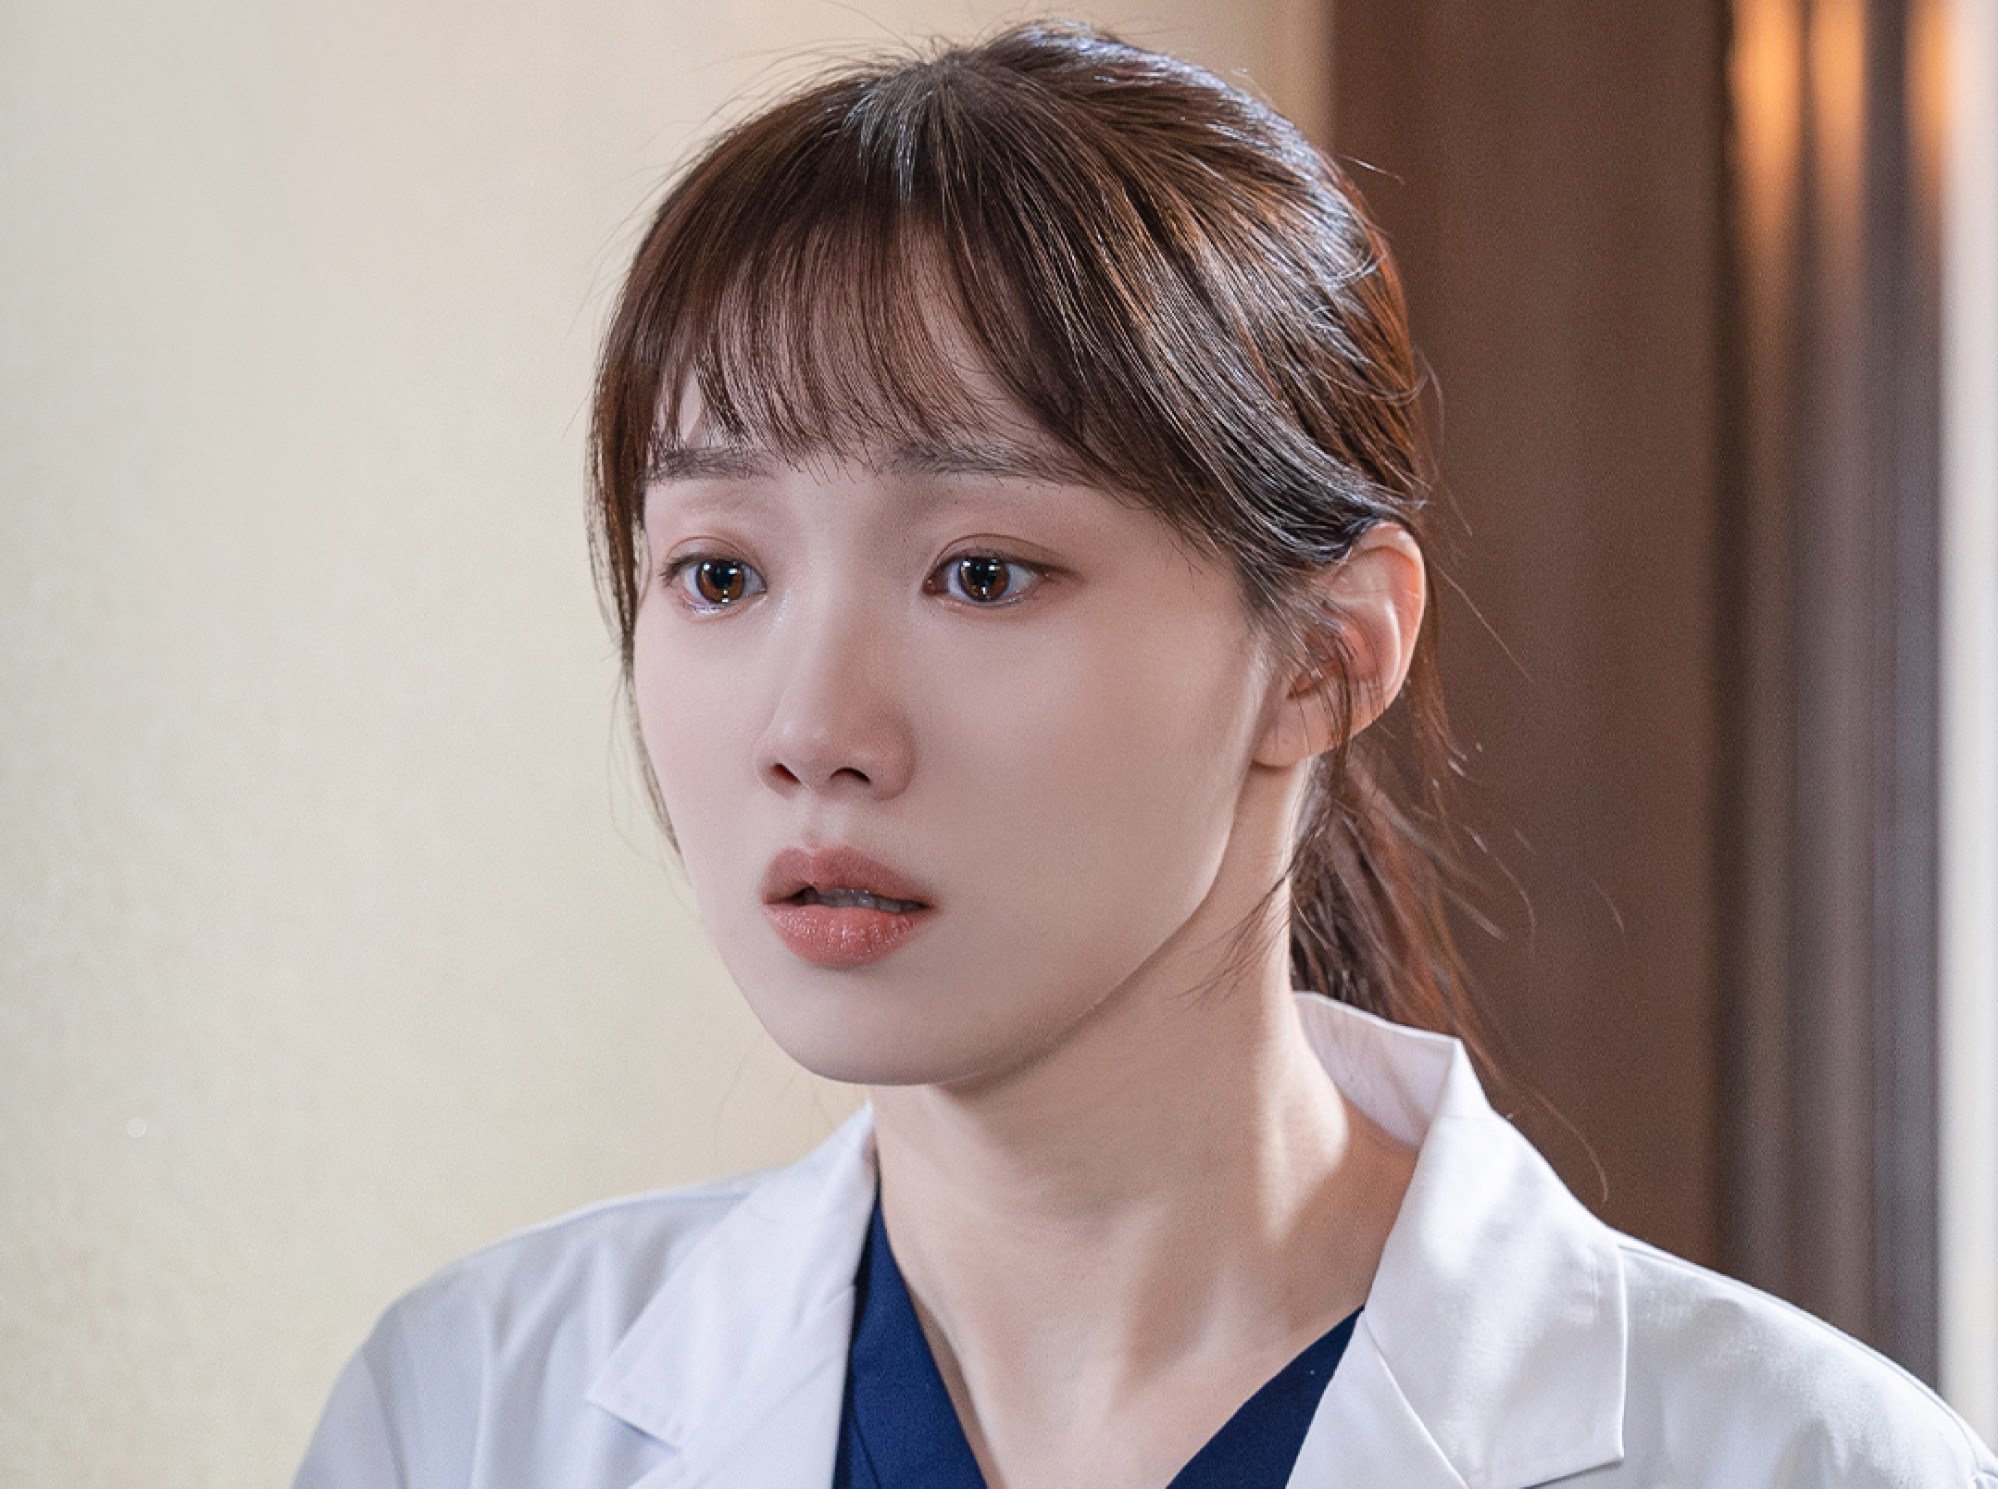 lee jong-suk may join k-drama i’m against my romance opposite go min-si; season 3 of strong girl confirmed – korean drama casting latest